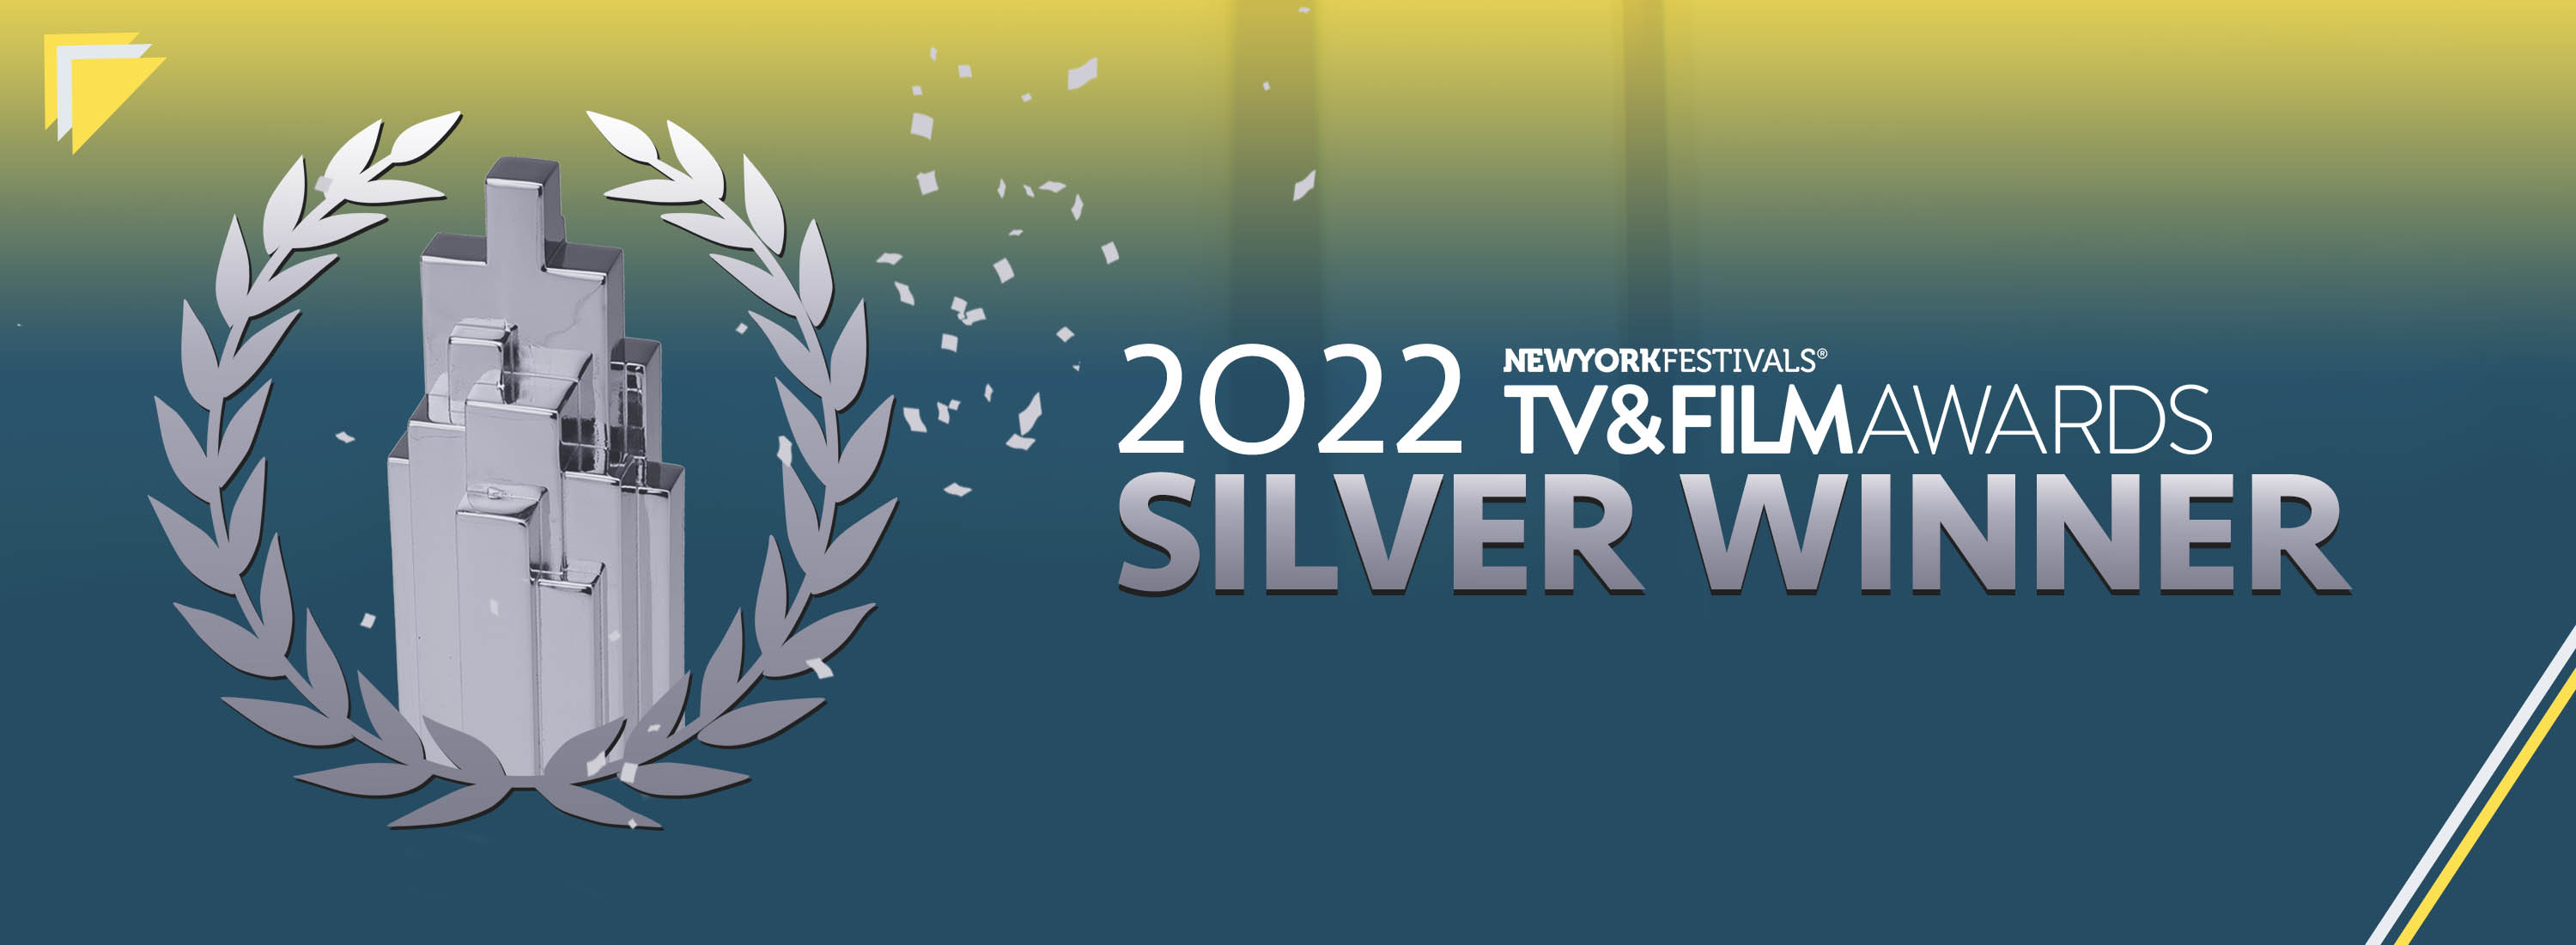 New York Film and TV Awards Silver Winner 2022 - Film